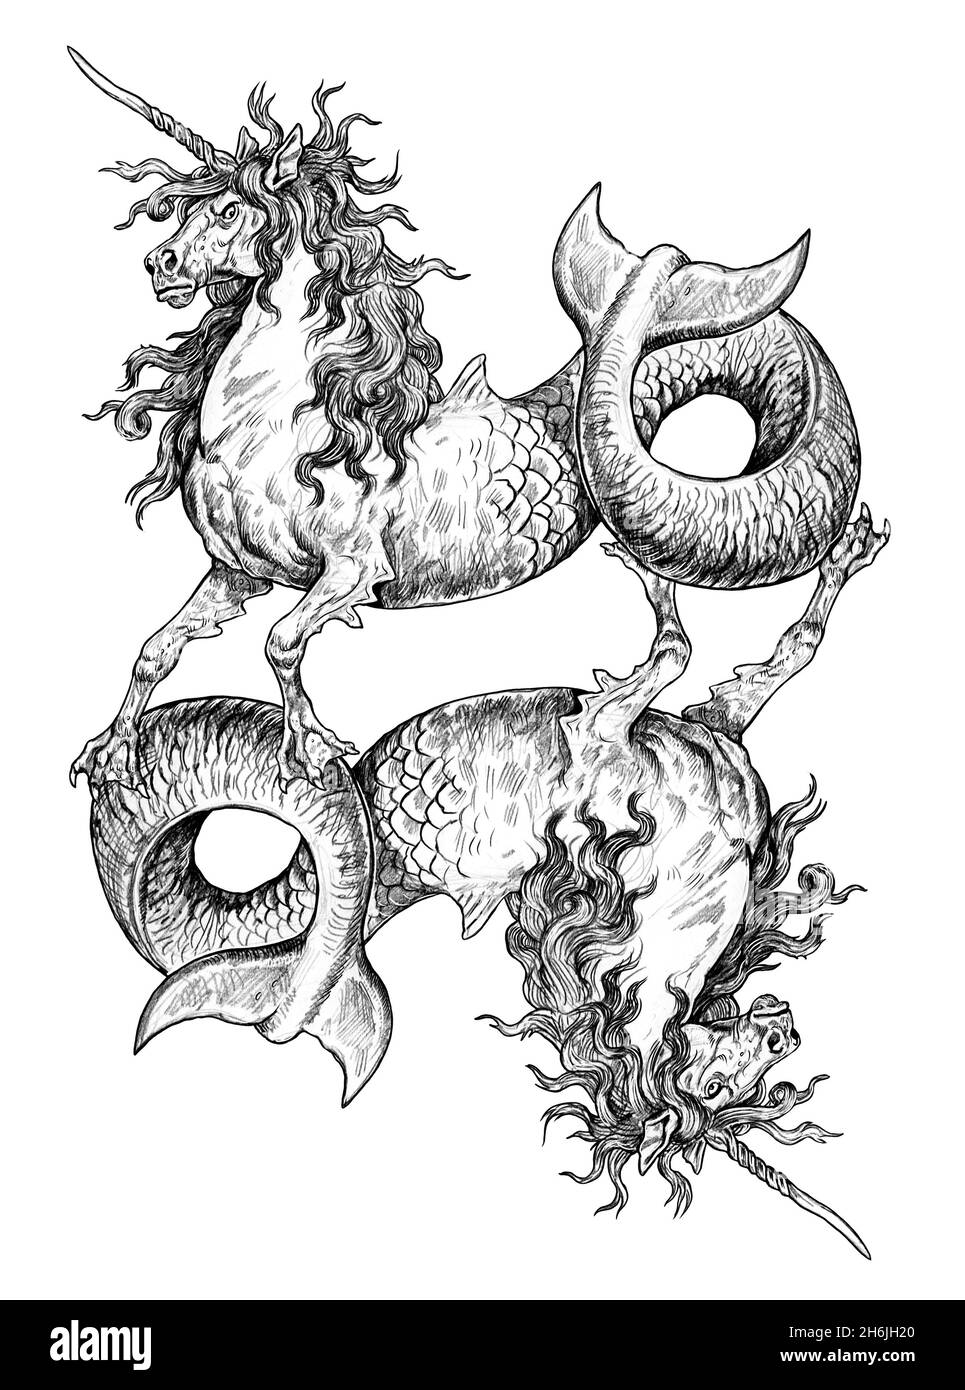 Mystical seahorse unicorn. Underwater creature. Fantasy drawing. Stock Photo